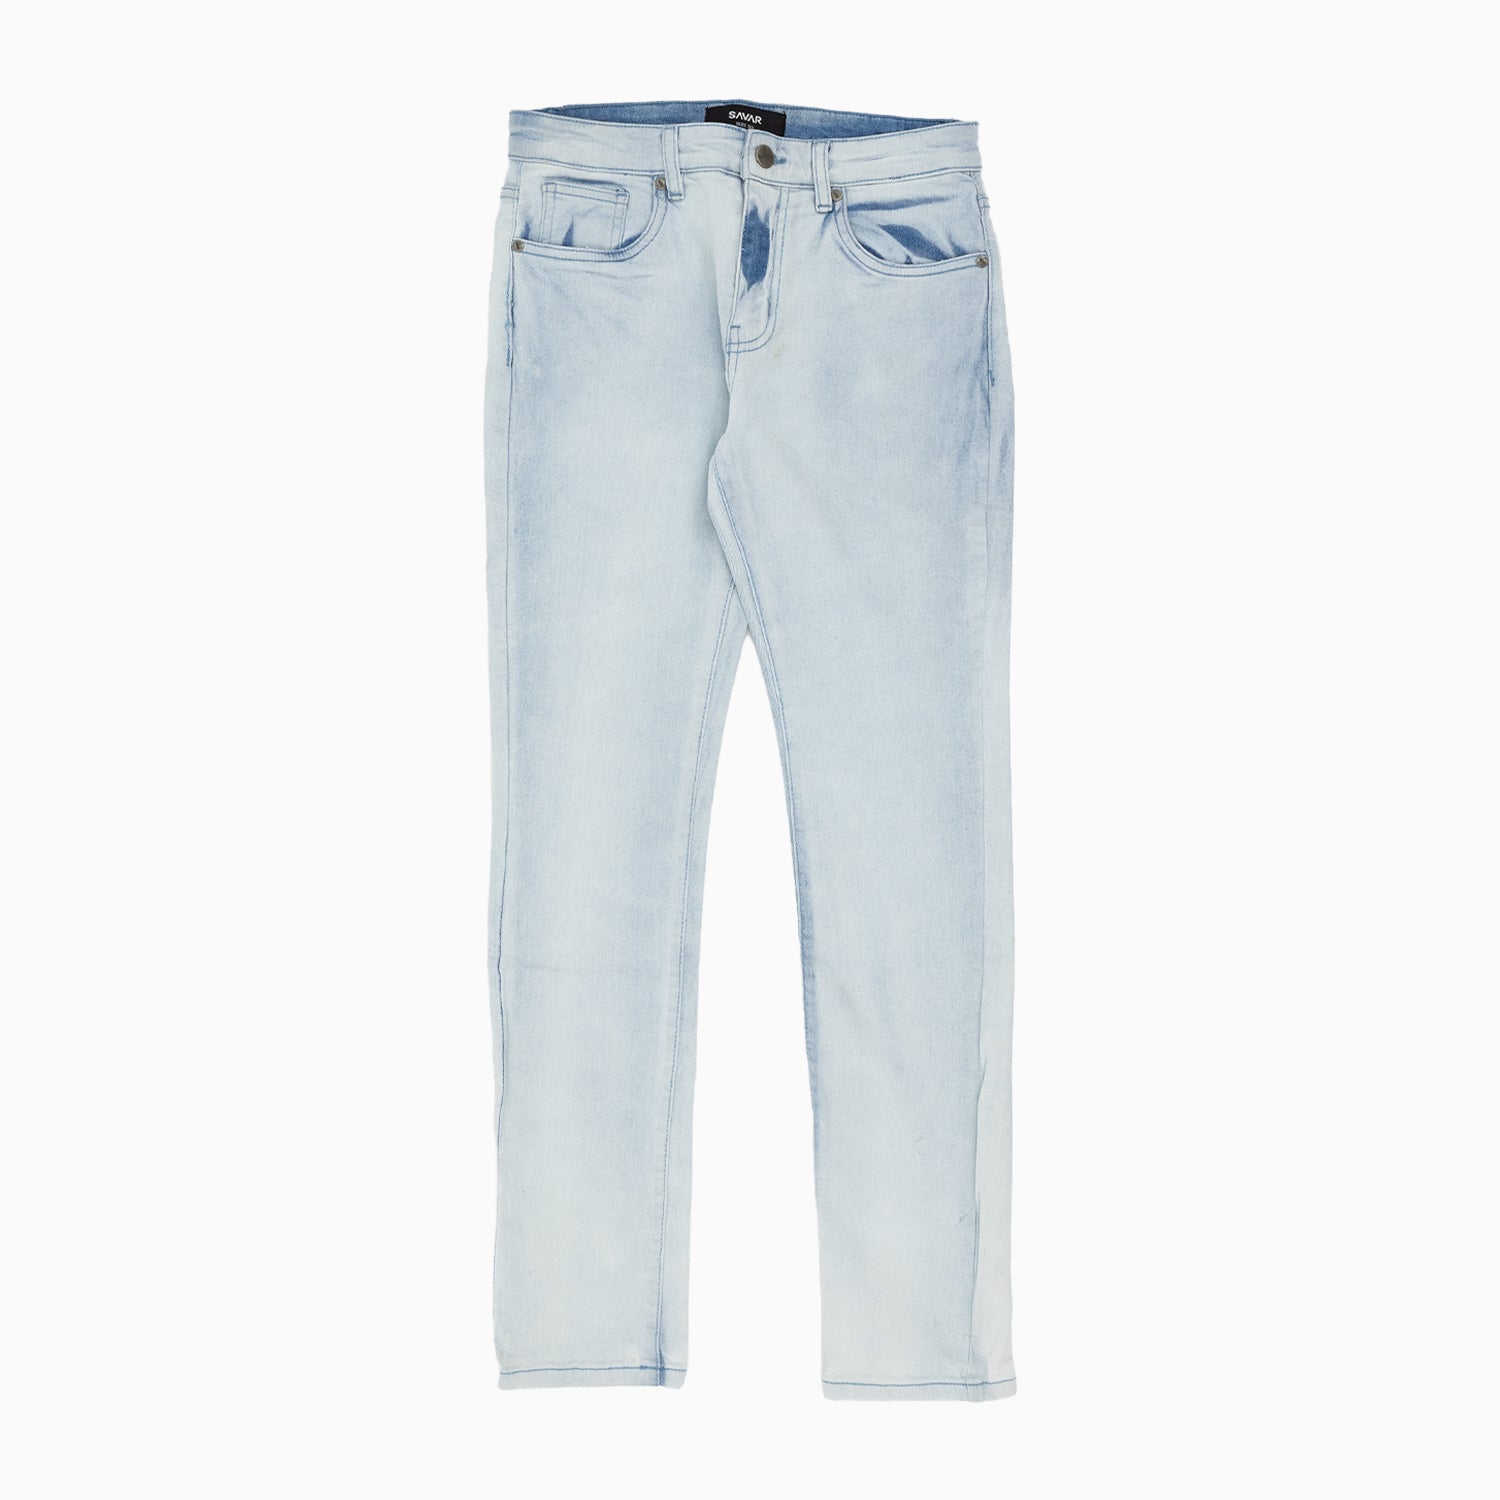 mens-savar-ice-blue-slim-denim-jeans-pant-sjb0331-iceblu